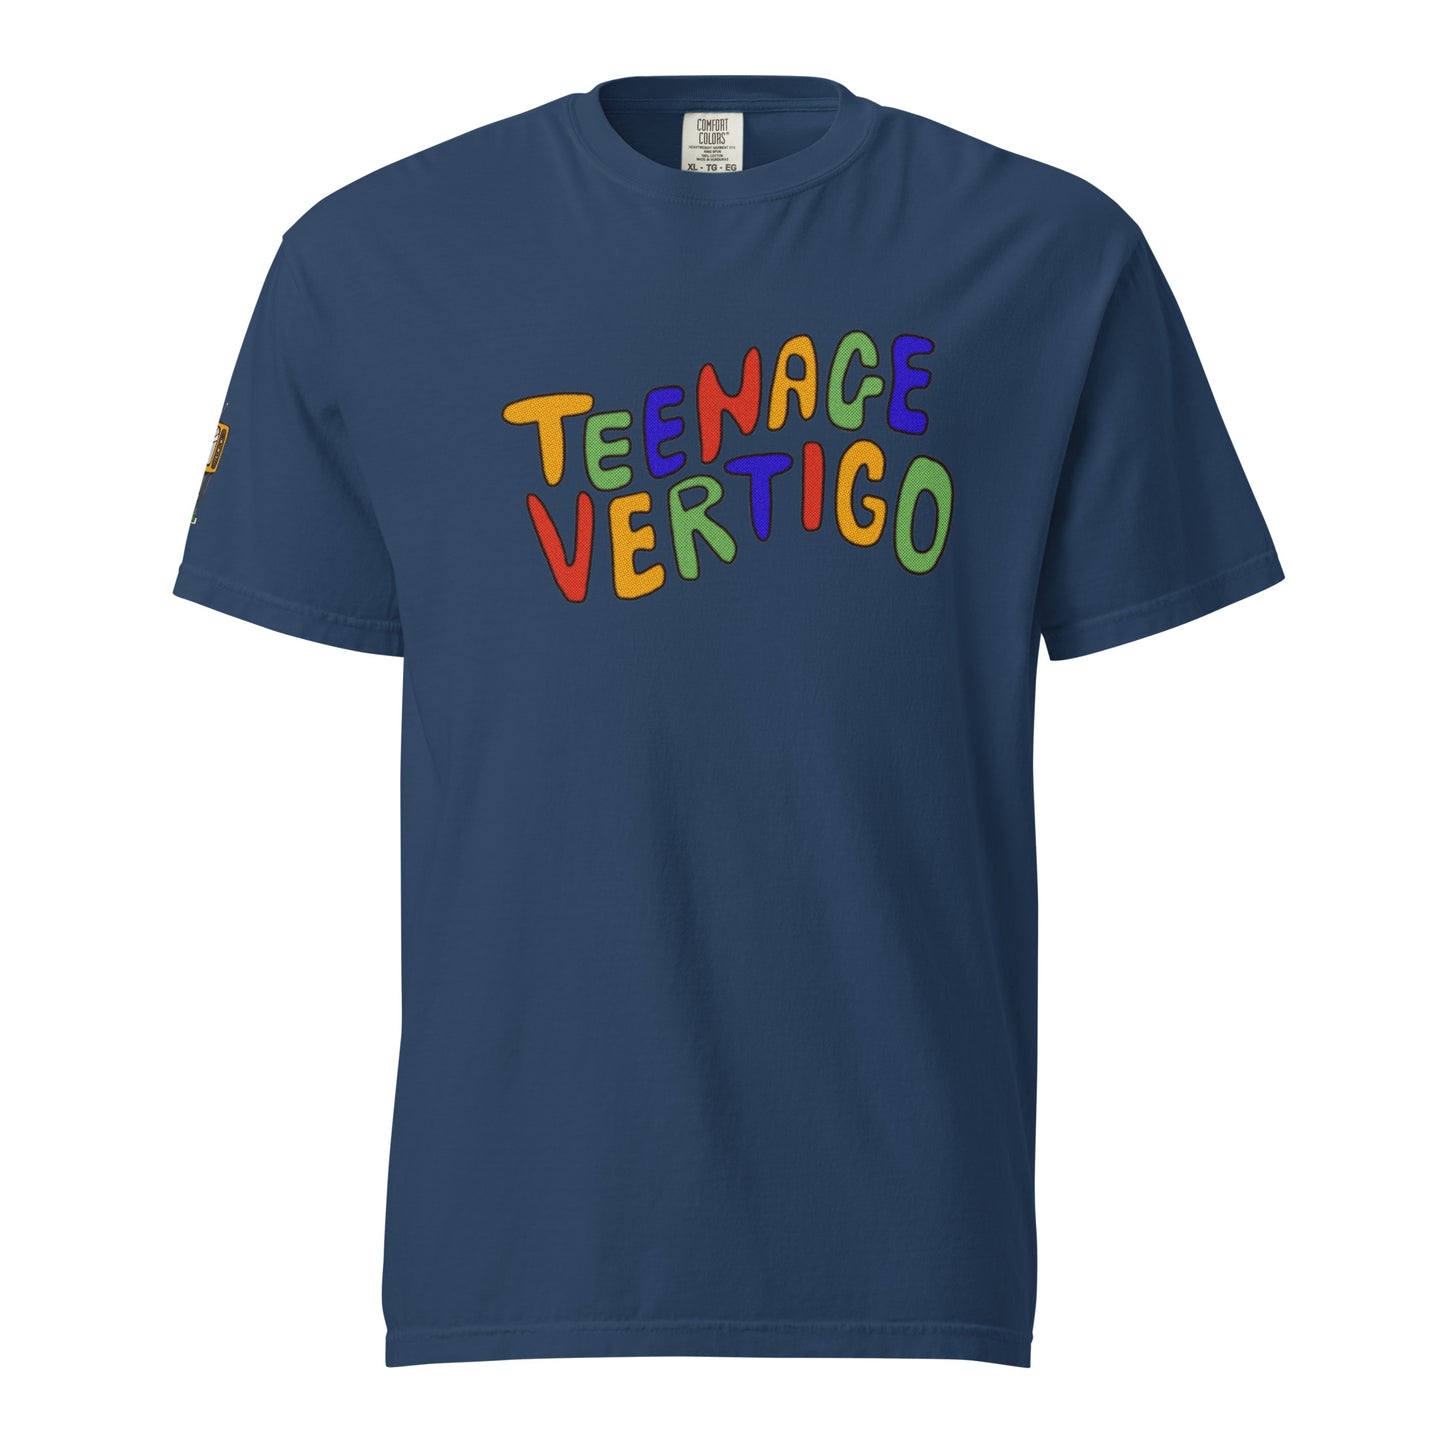 Teenage Vertigo (Coloured) Unisex Heavyweight Tee